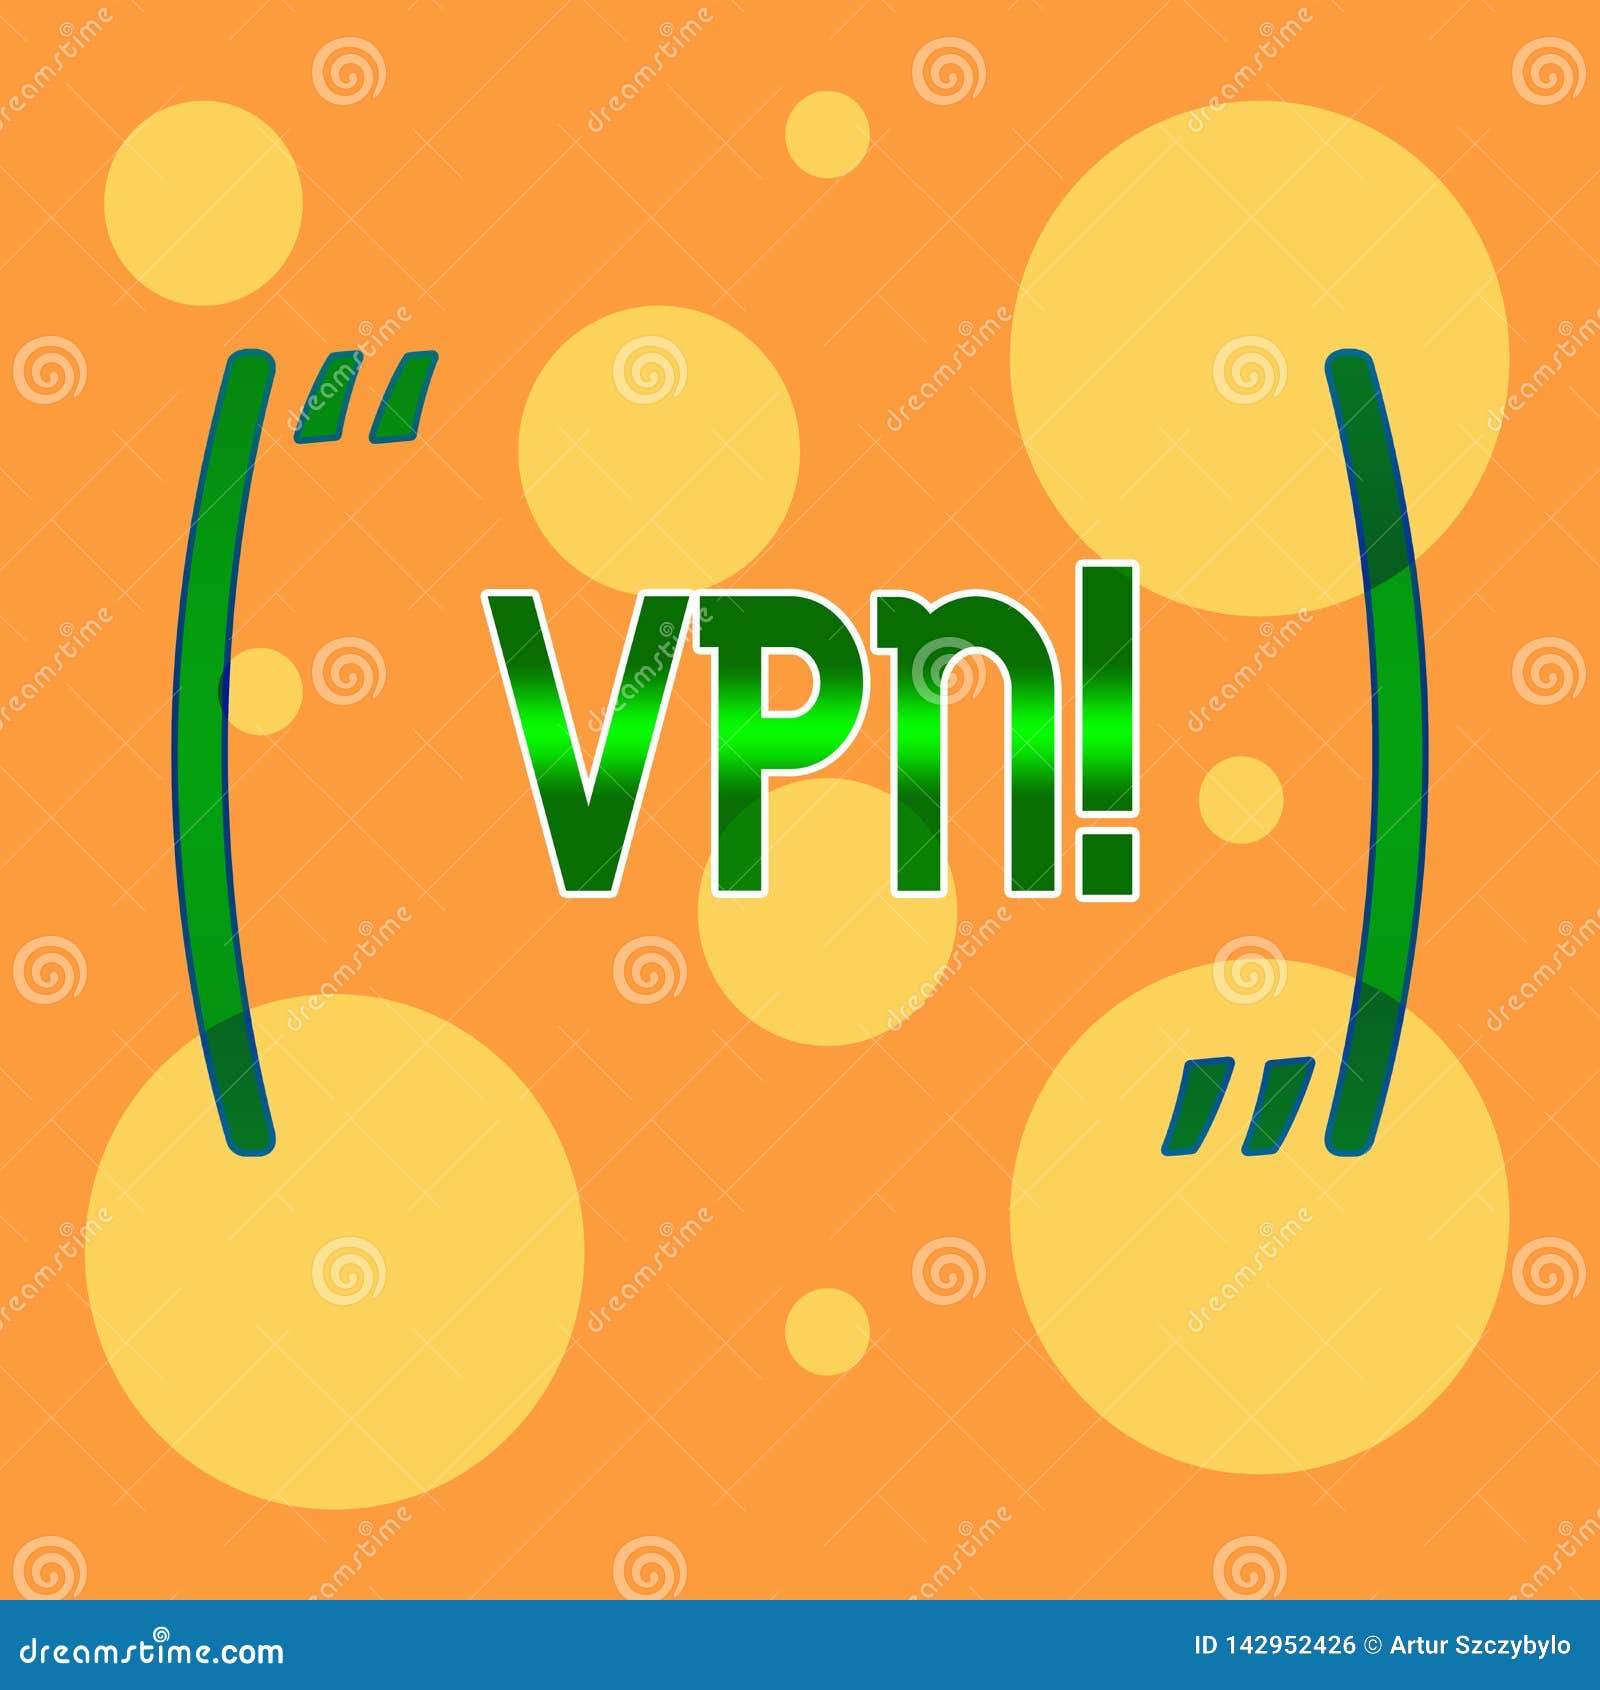 domain across vpn